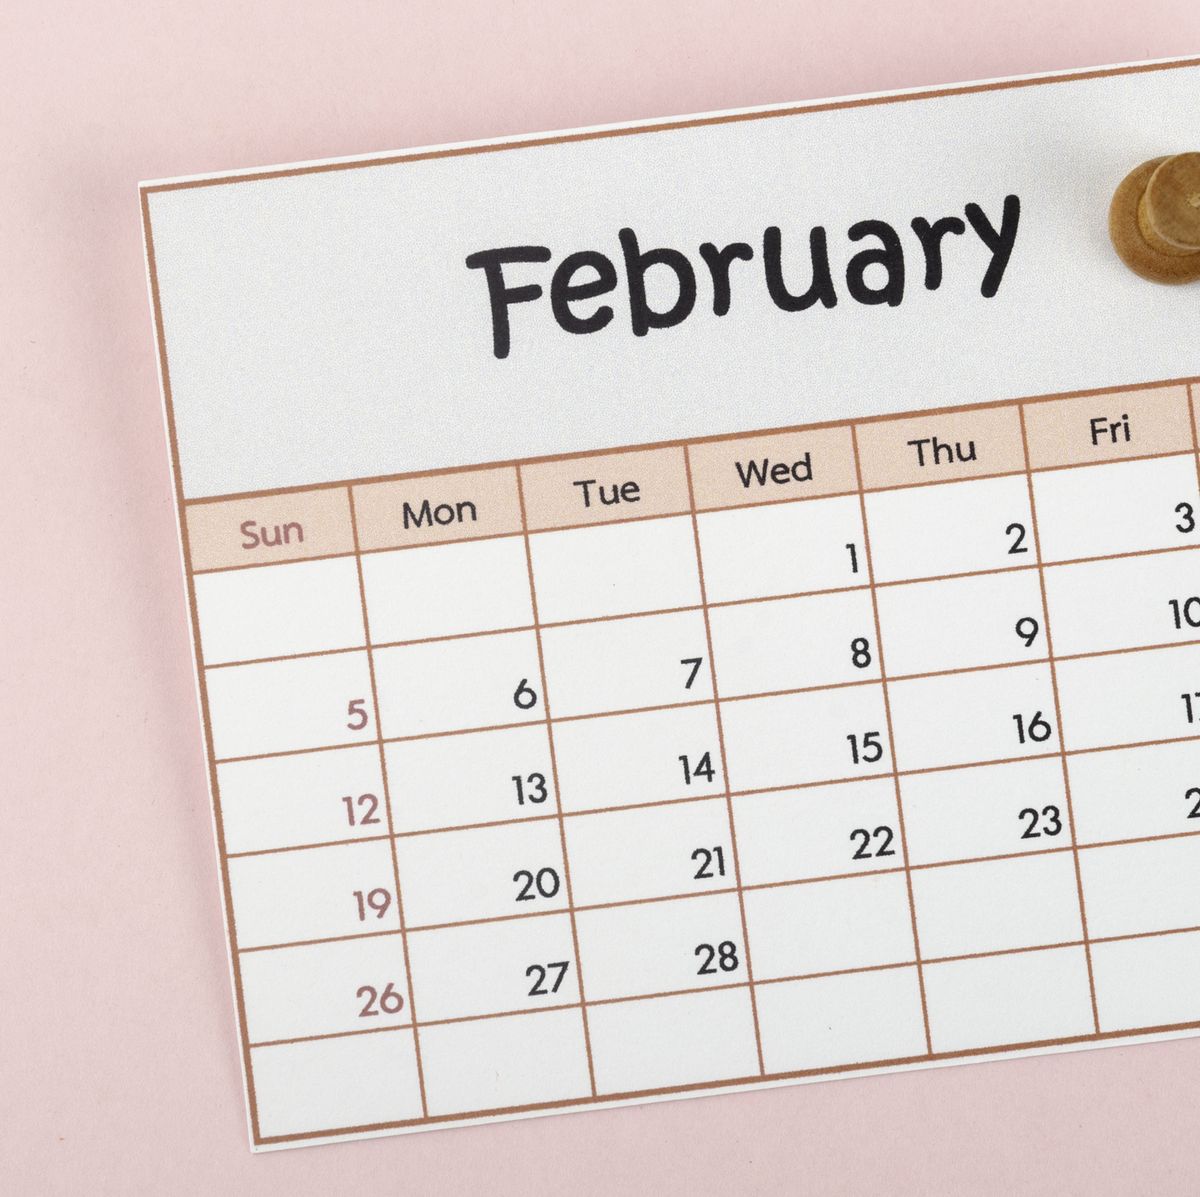 BOY SCOUTS ANNIVERSARY WEEK - First Full Week in February